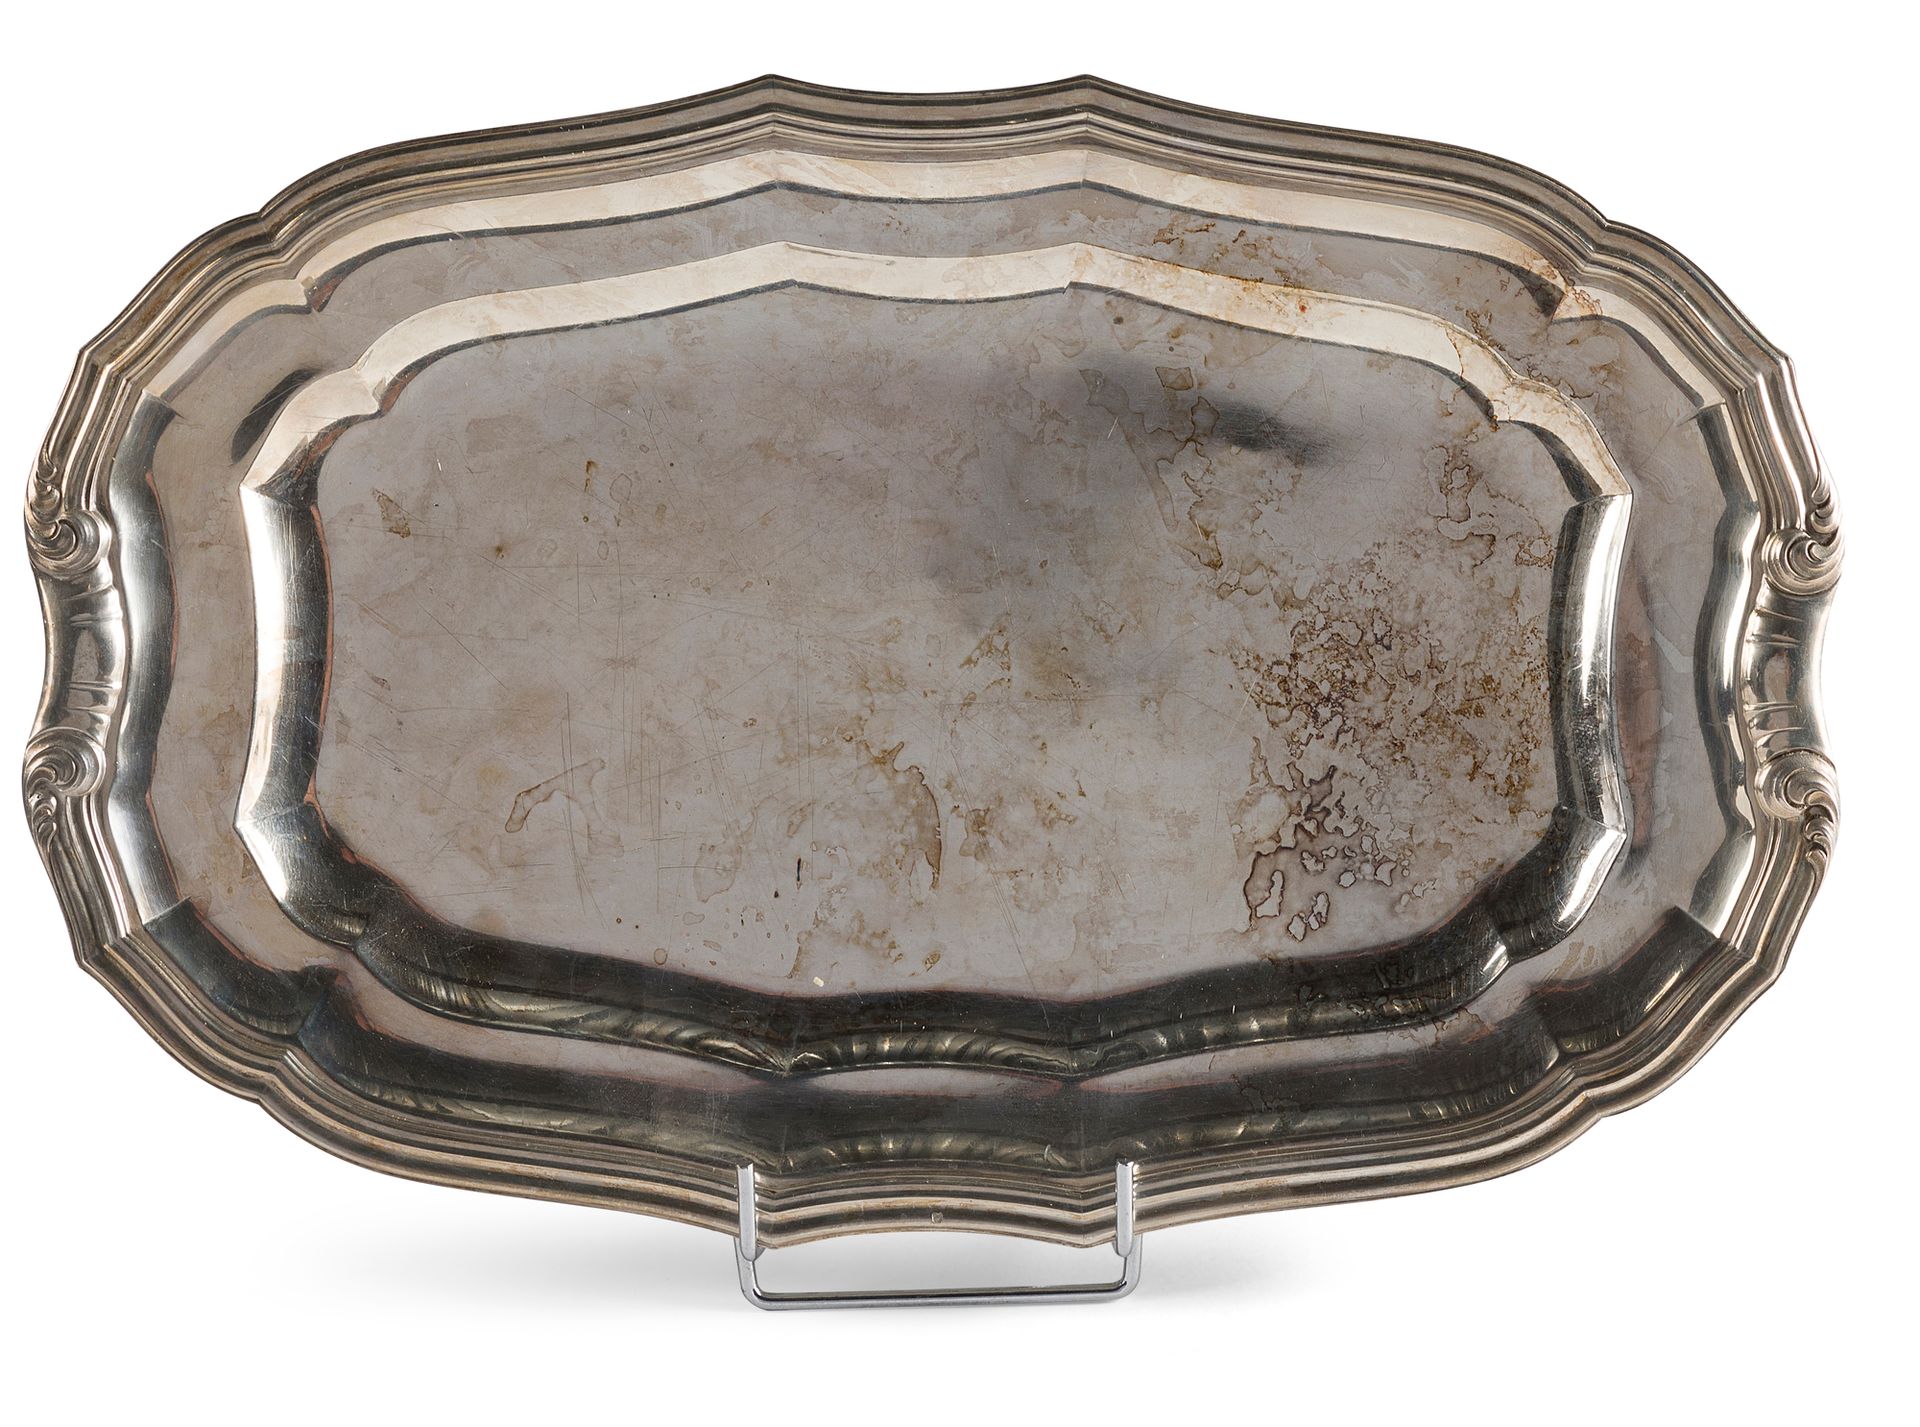 Null 一个银质烤盘（Minerve第一标题），边缘有鱼鳞和卷边。

MO ODIOT

长40厘米

重量 1 137 g